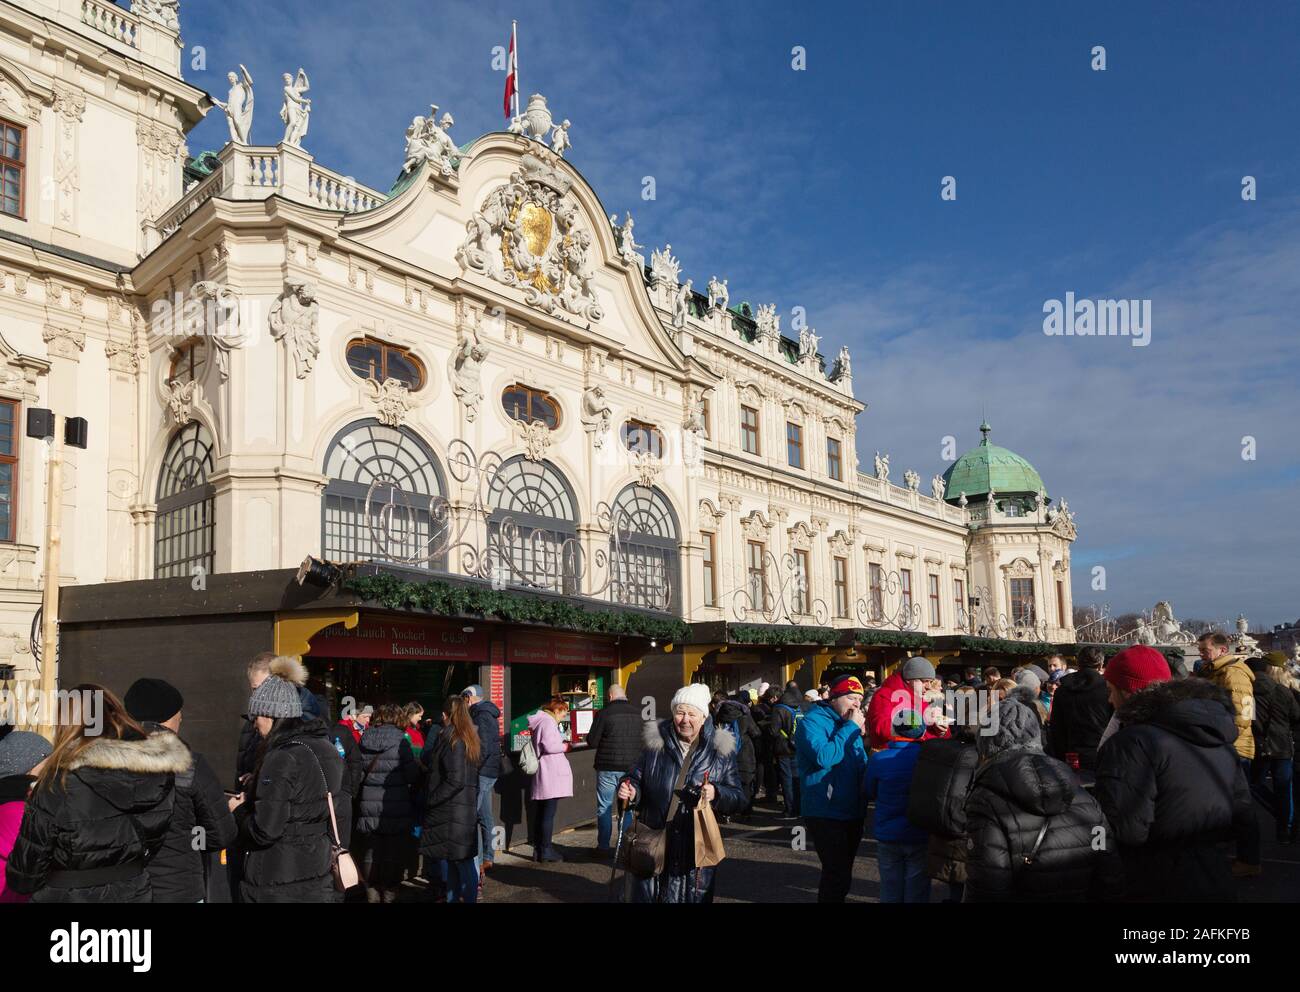 Vienna Christmas markets - people shopping at the christmas market at the Upper Belvedere palace, Vienna Austria Europe Stock Photo